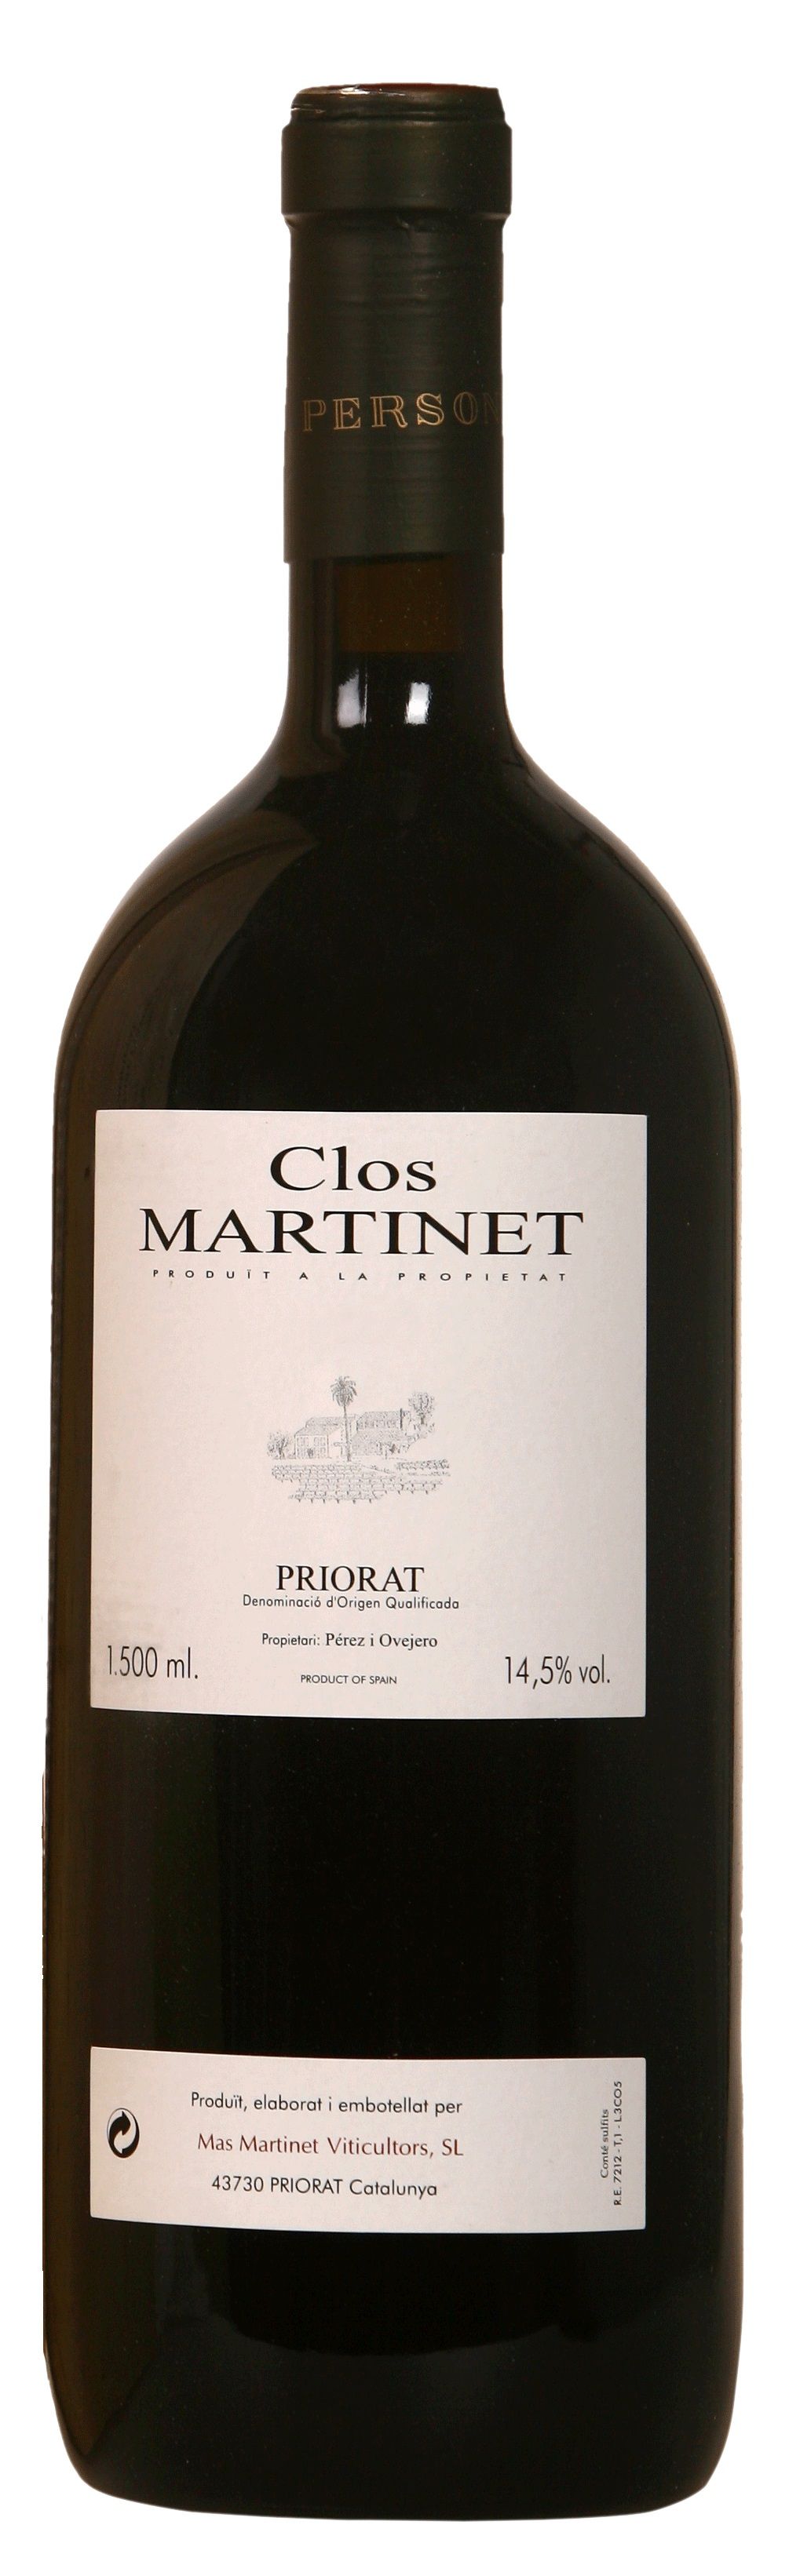 Mas Martinet, Clos Martinet, 2014